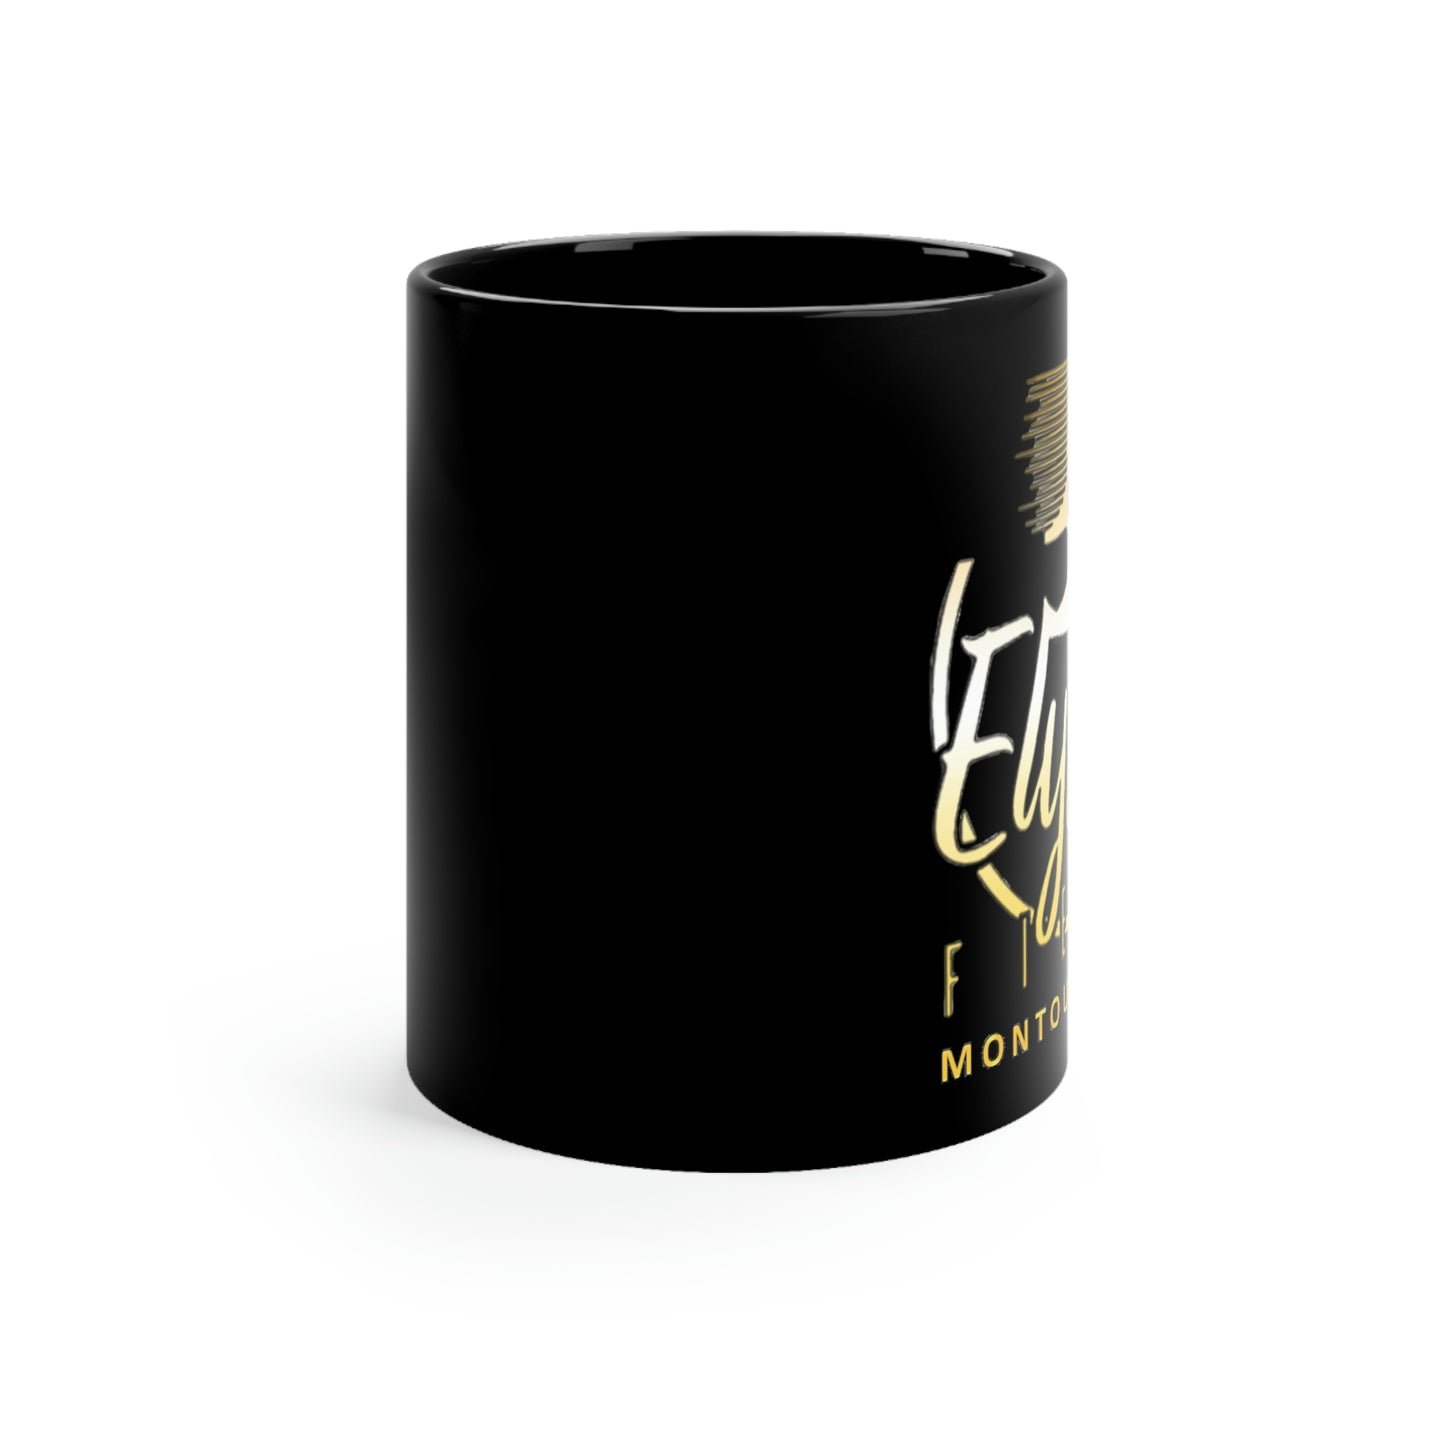 Elysian Fields - Black mug 11oz - Color Logo